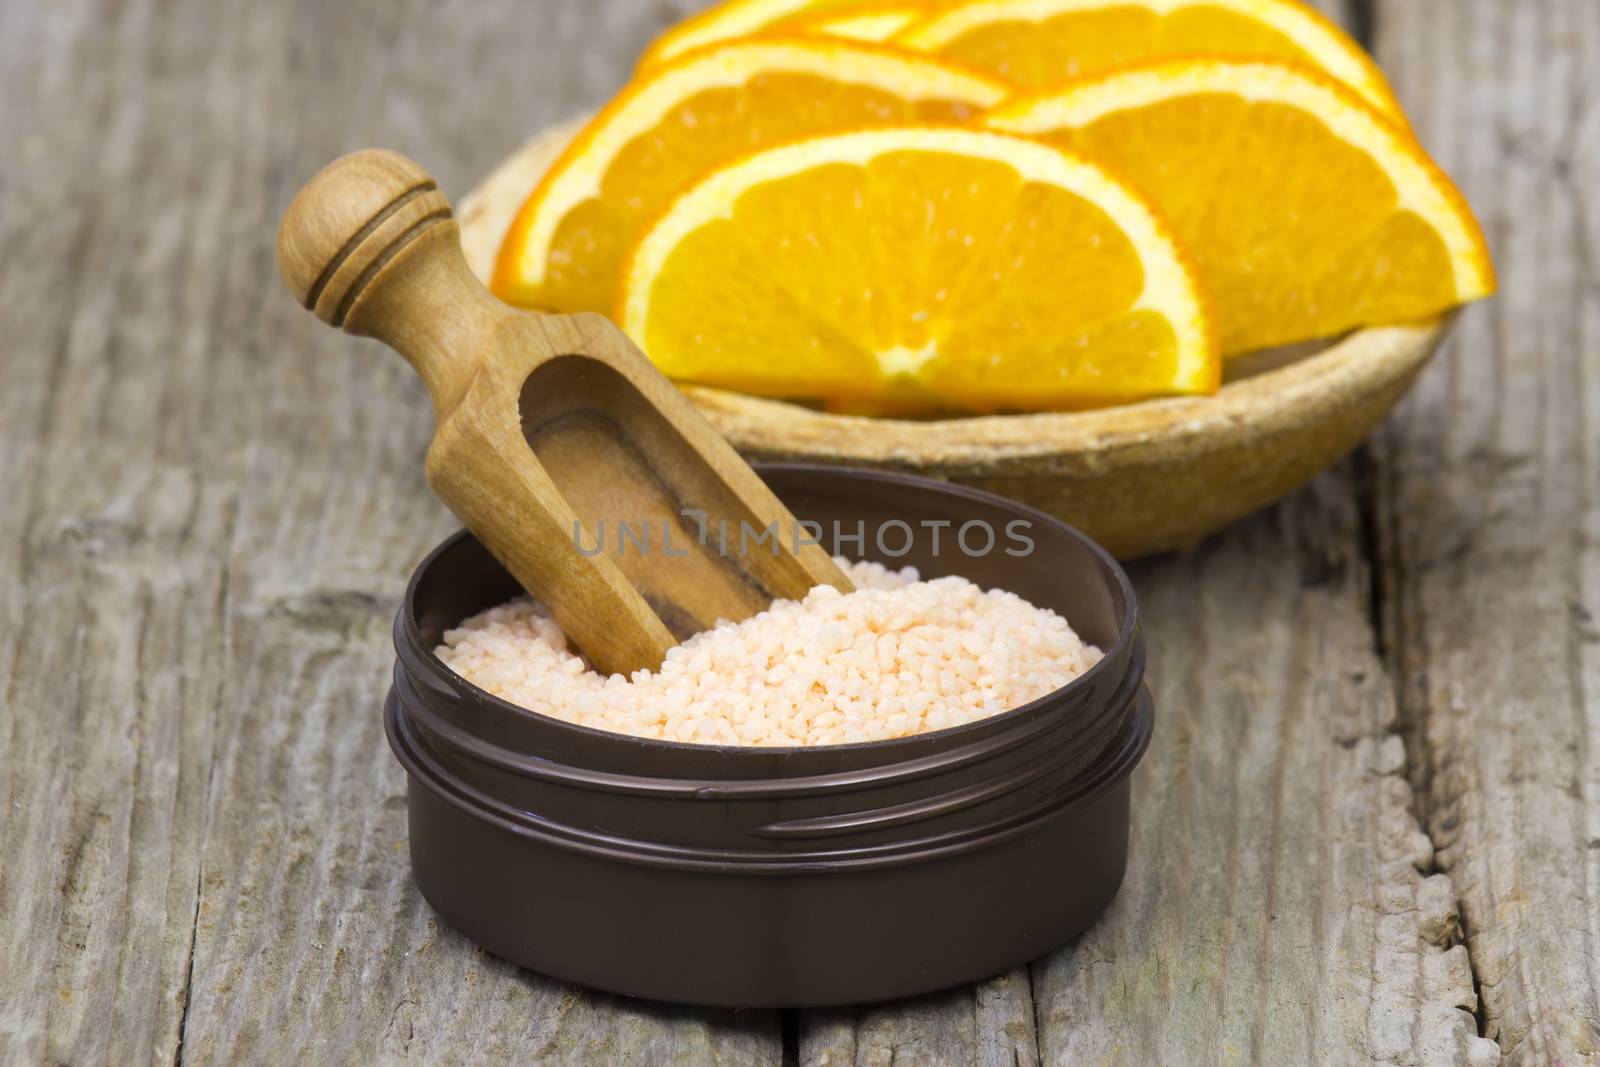 orange bath salt and fresh fruits - beauty treatment by miradrozdowski